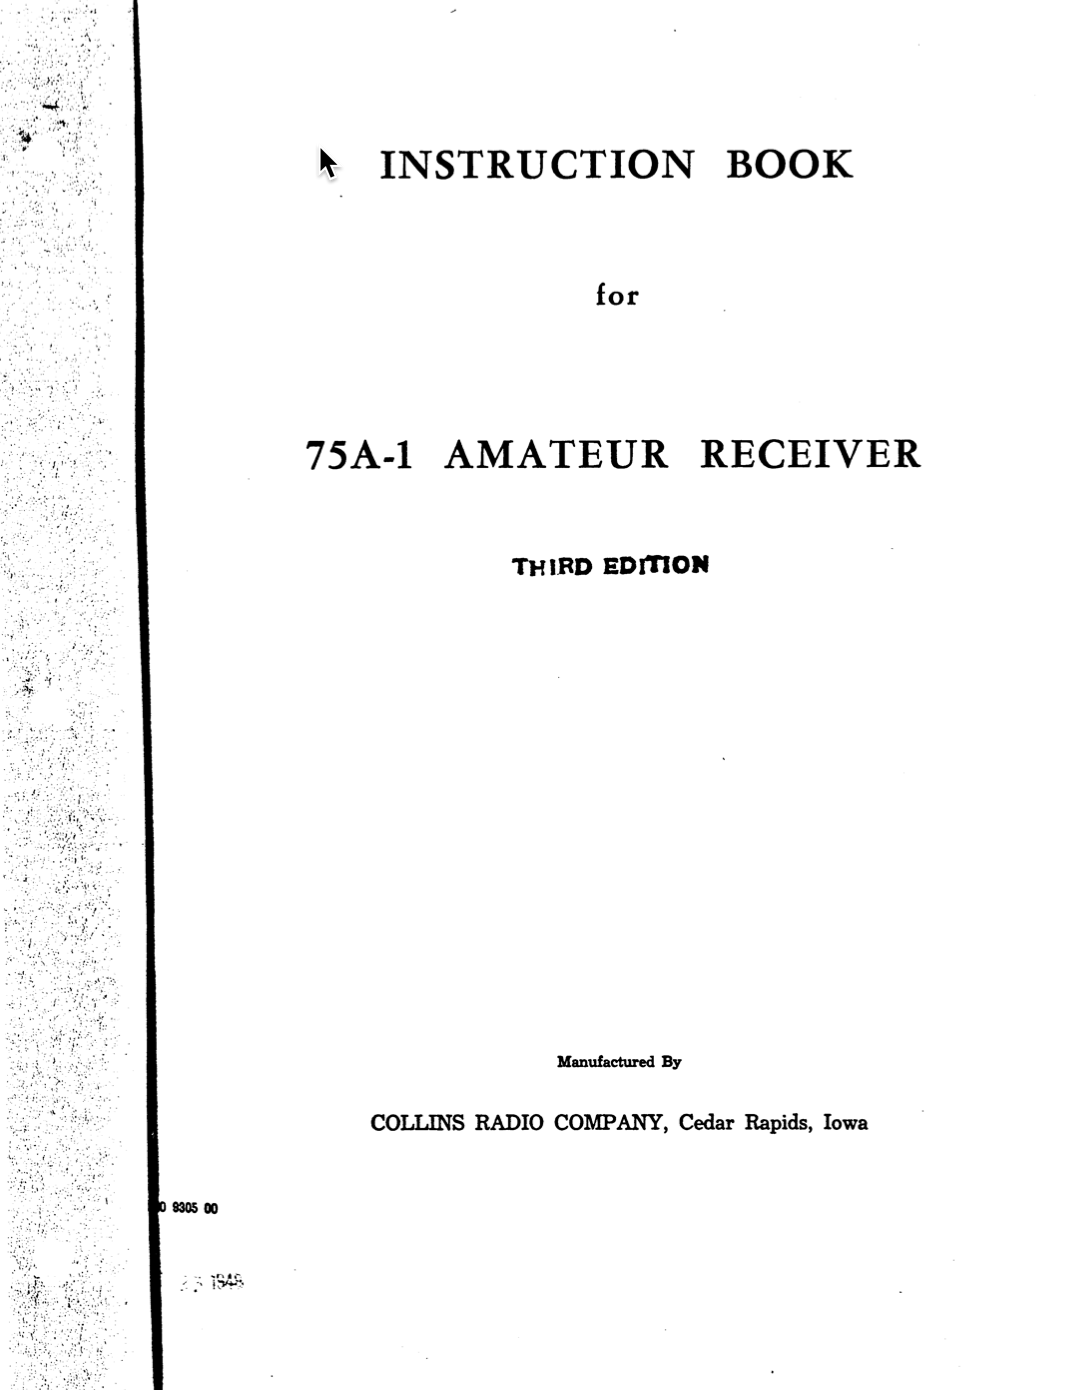 Collins 75A-1 Amateur Receiver - Instruction Manual 3rd Edition.